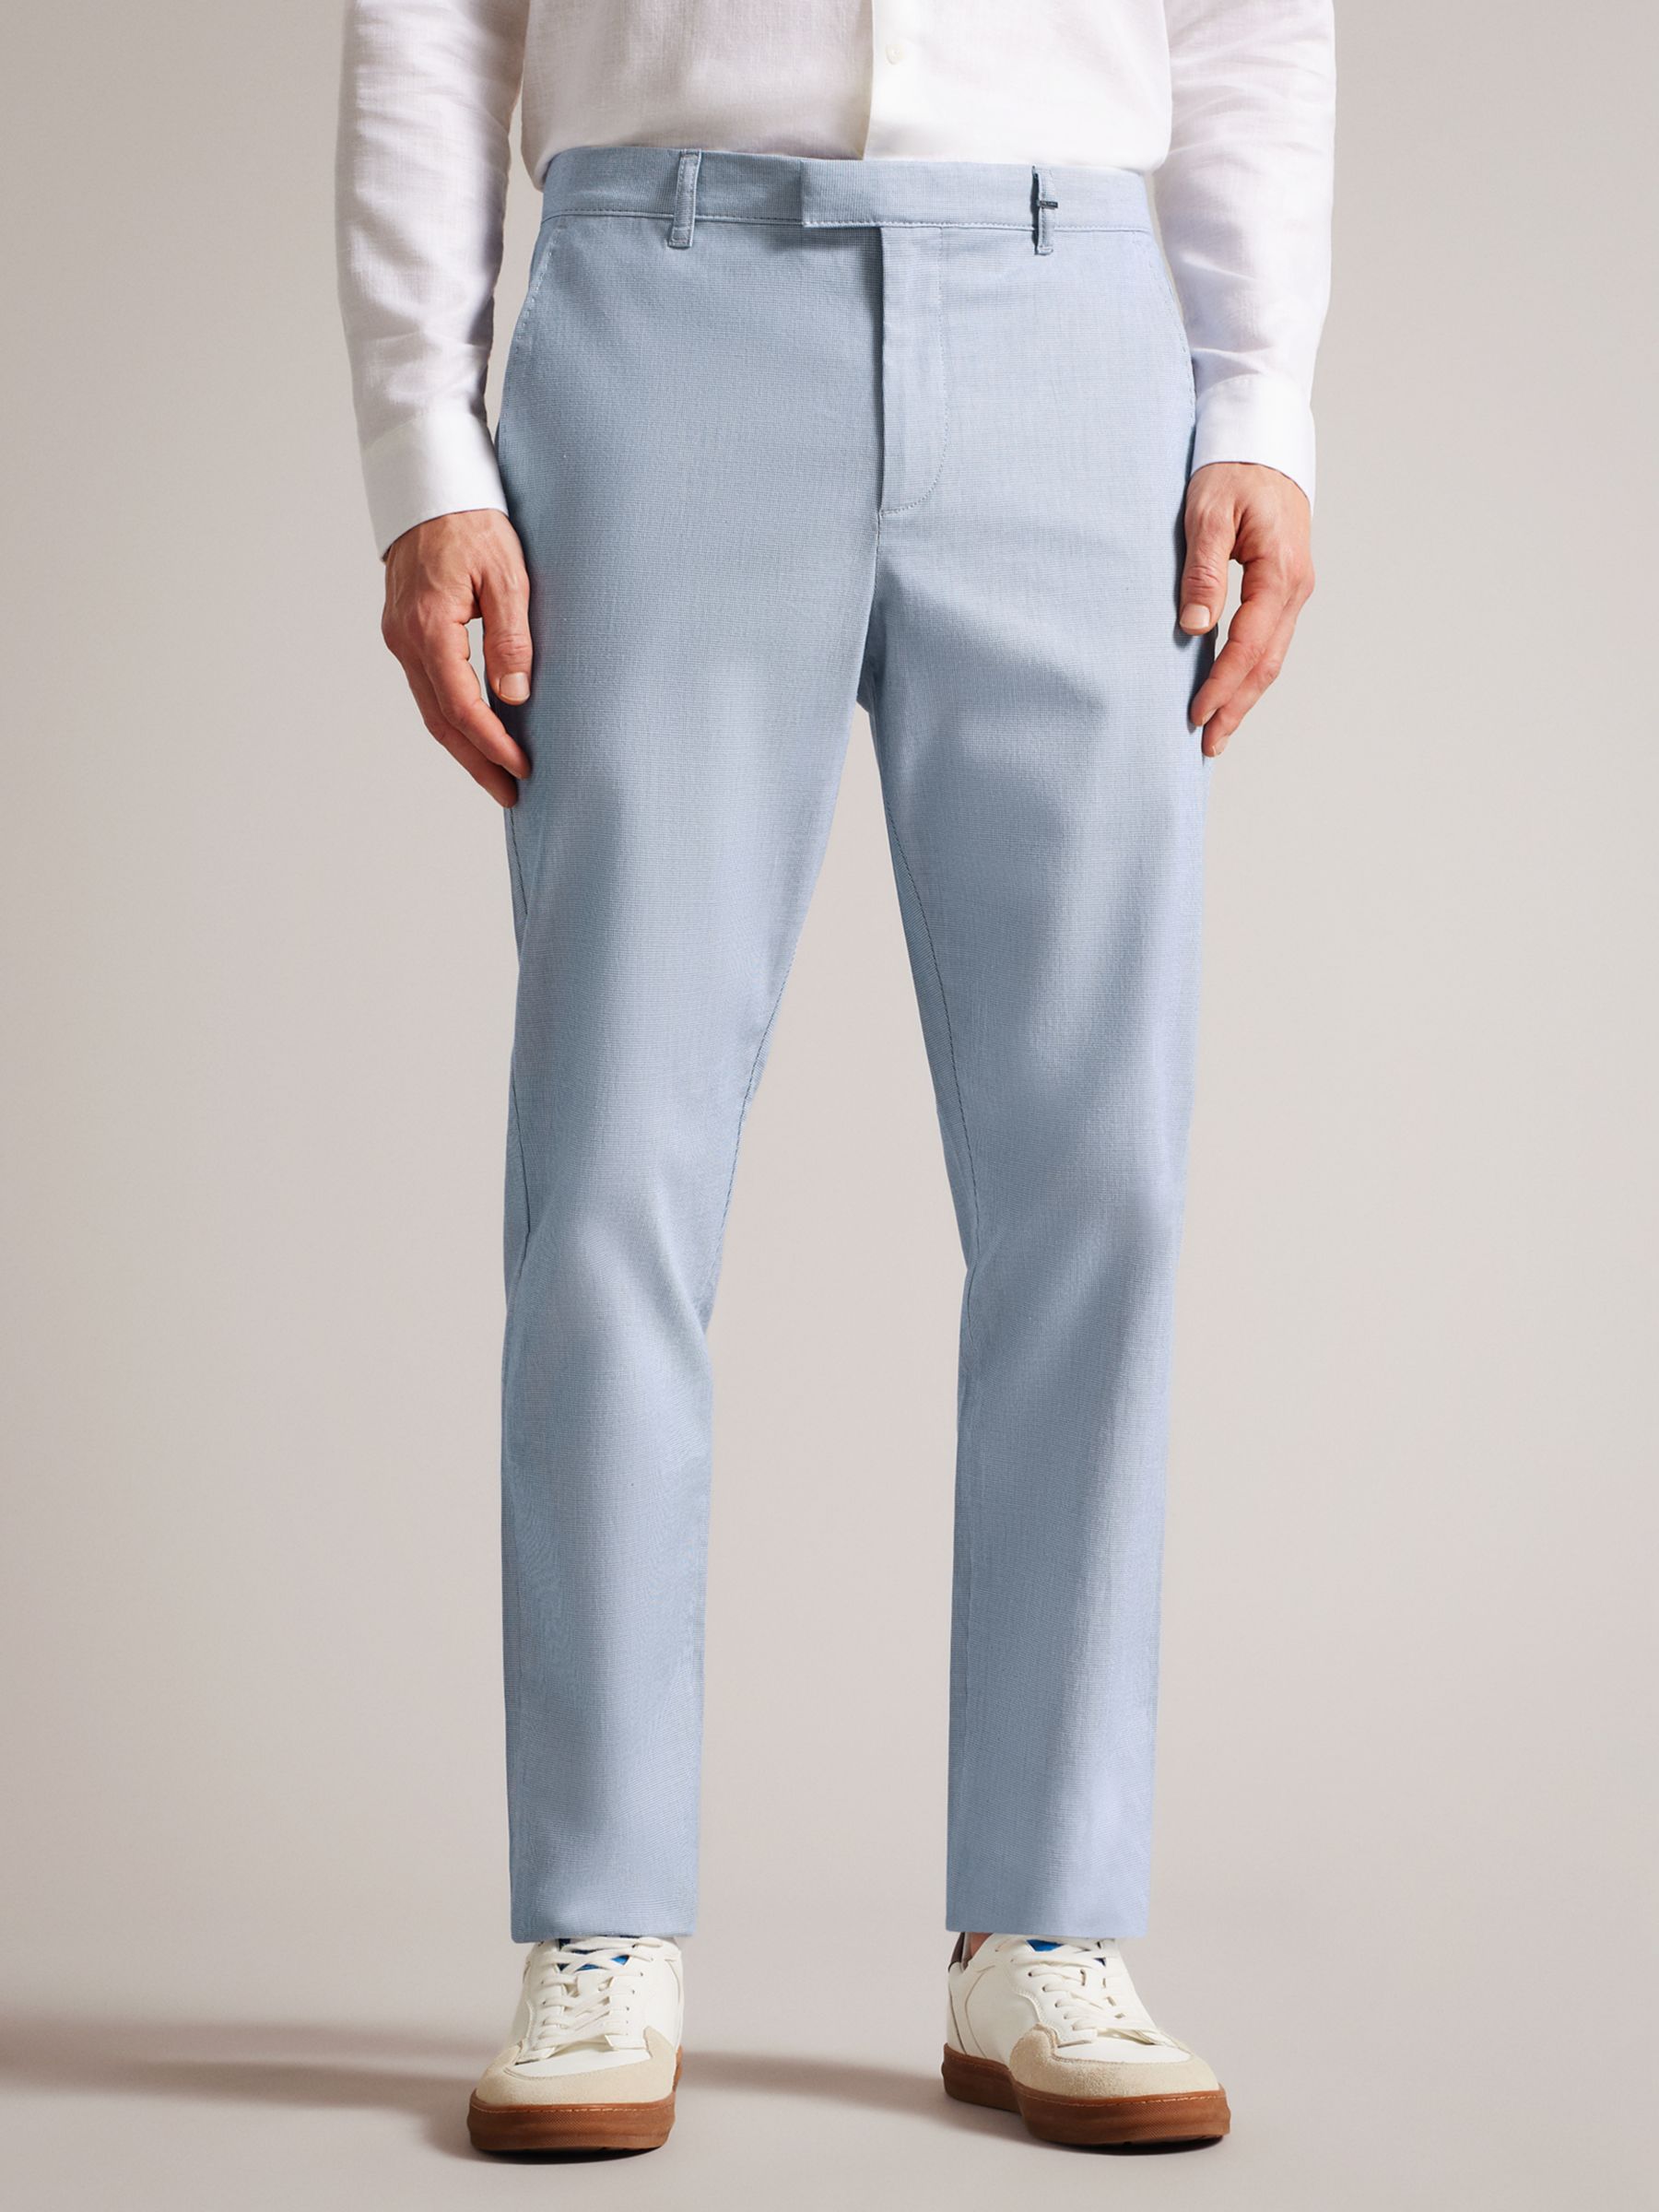 Ted Baker Irvine Slim Fit Trouser, Blue, 34R